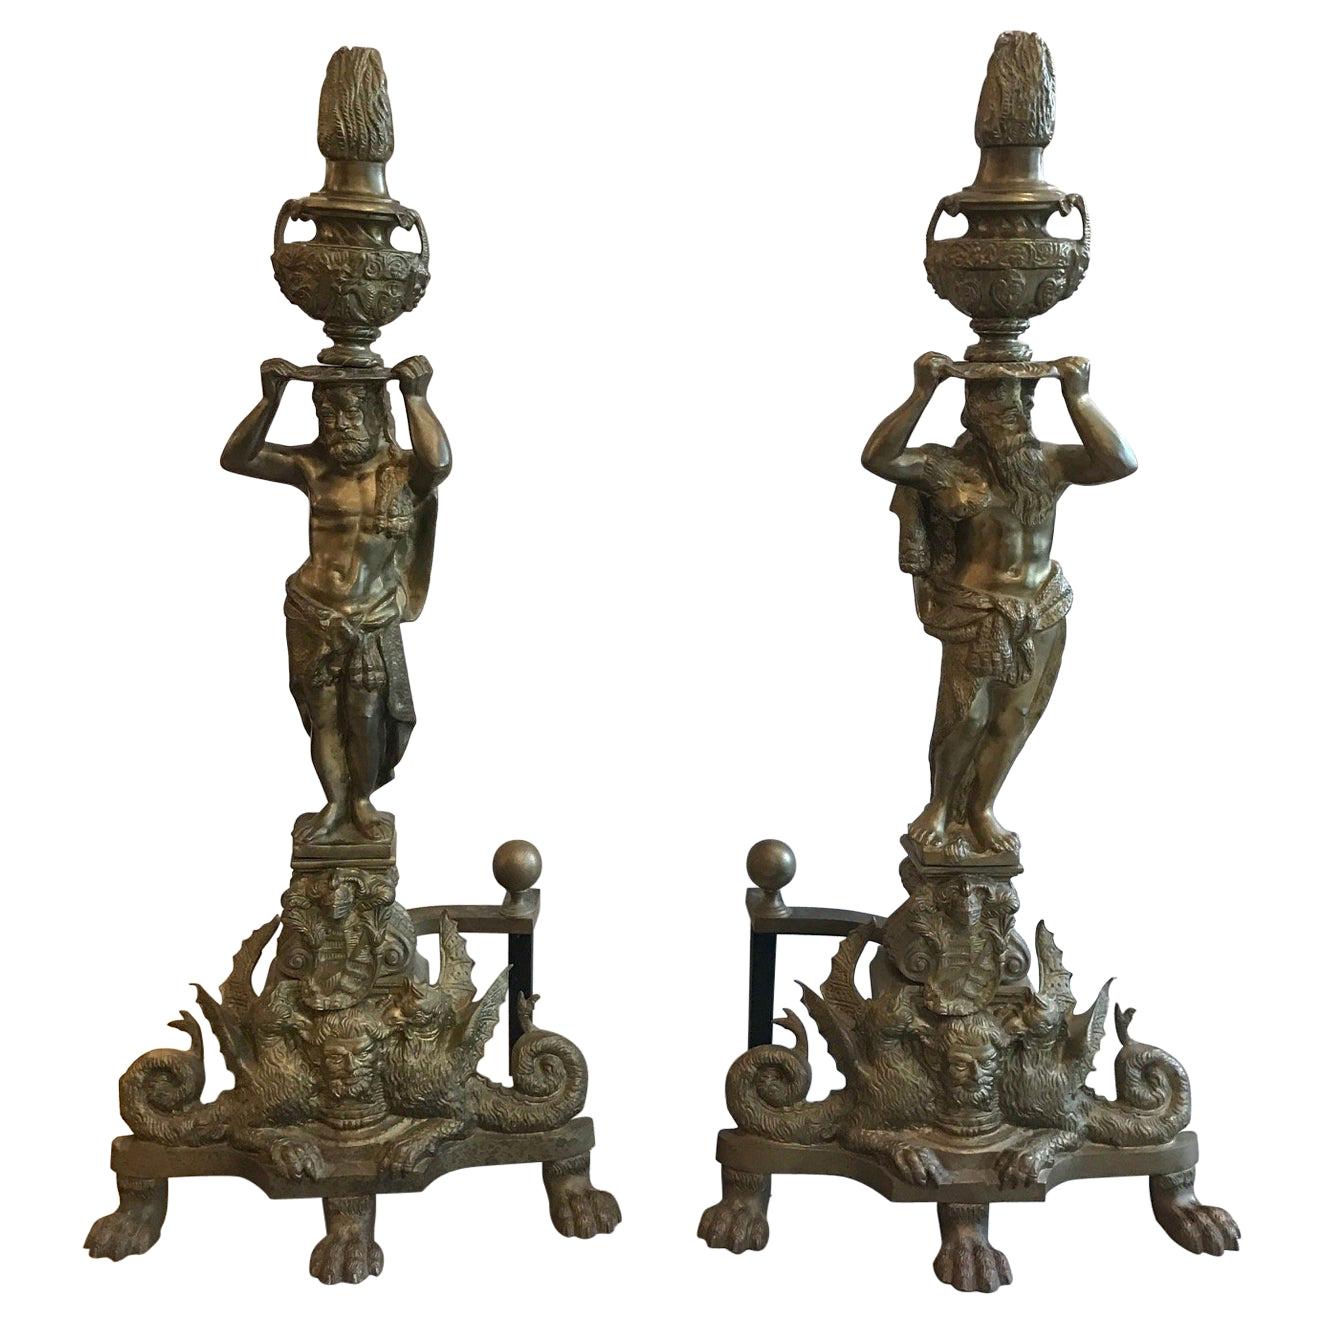 Zwei massive Chenet-Feuerböcke aus Messingguss, mythologischer Stil